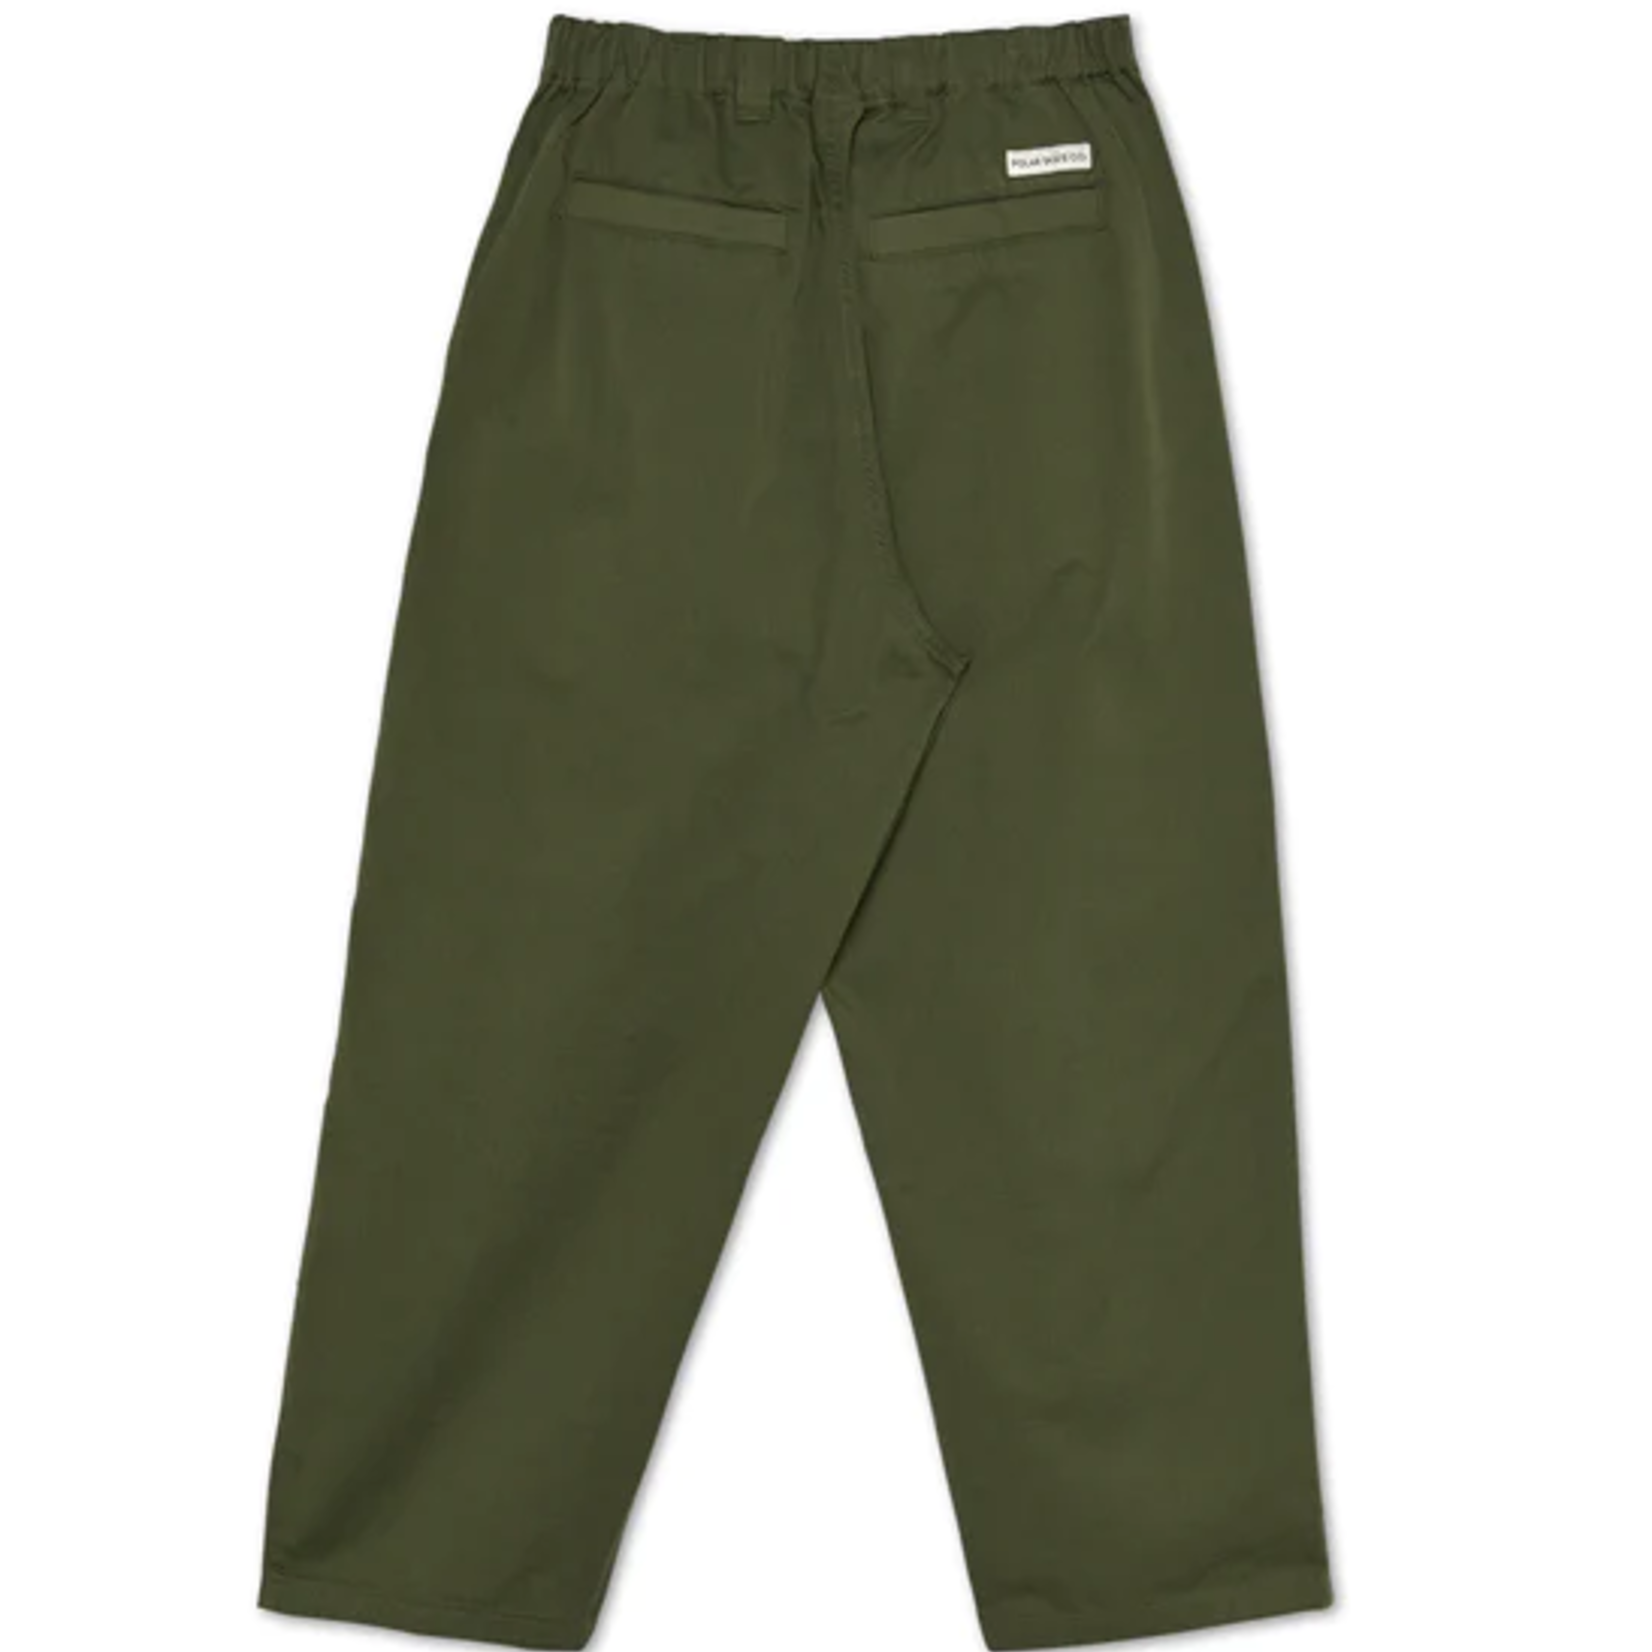 Polar Polar Railway Chino Pants - Uniform Green